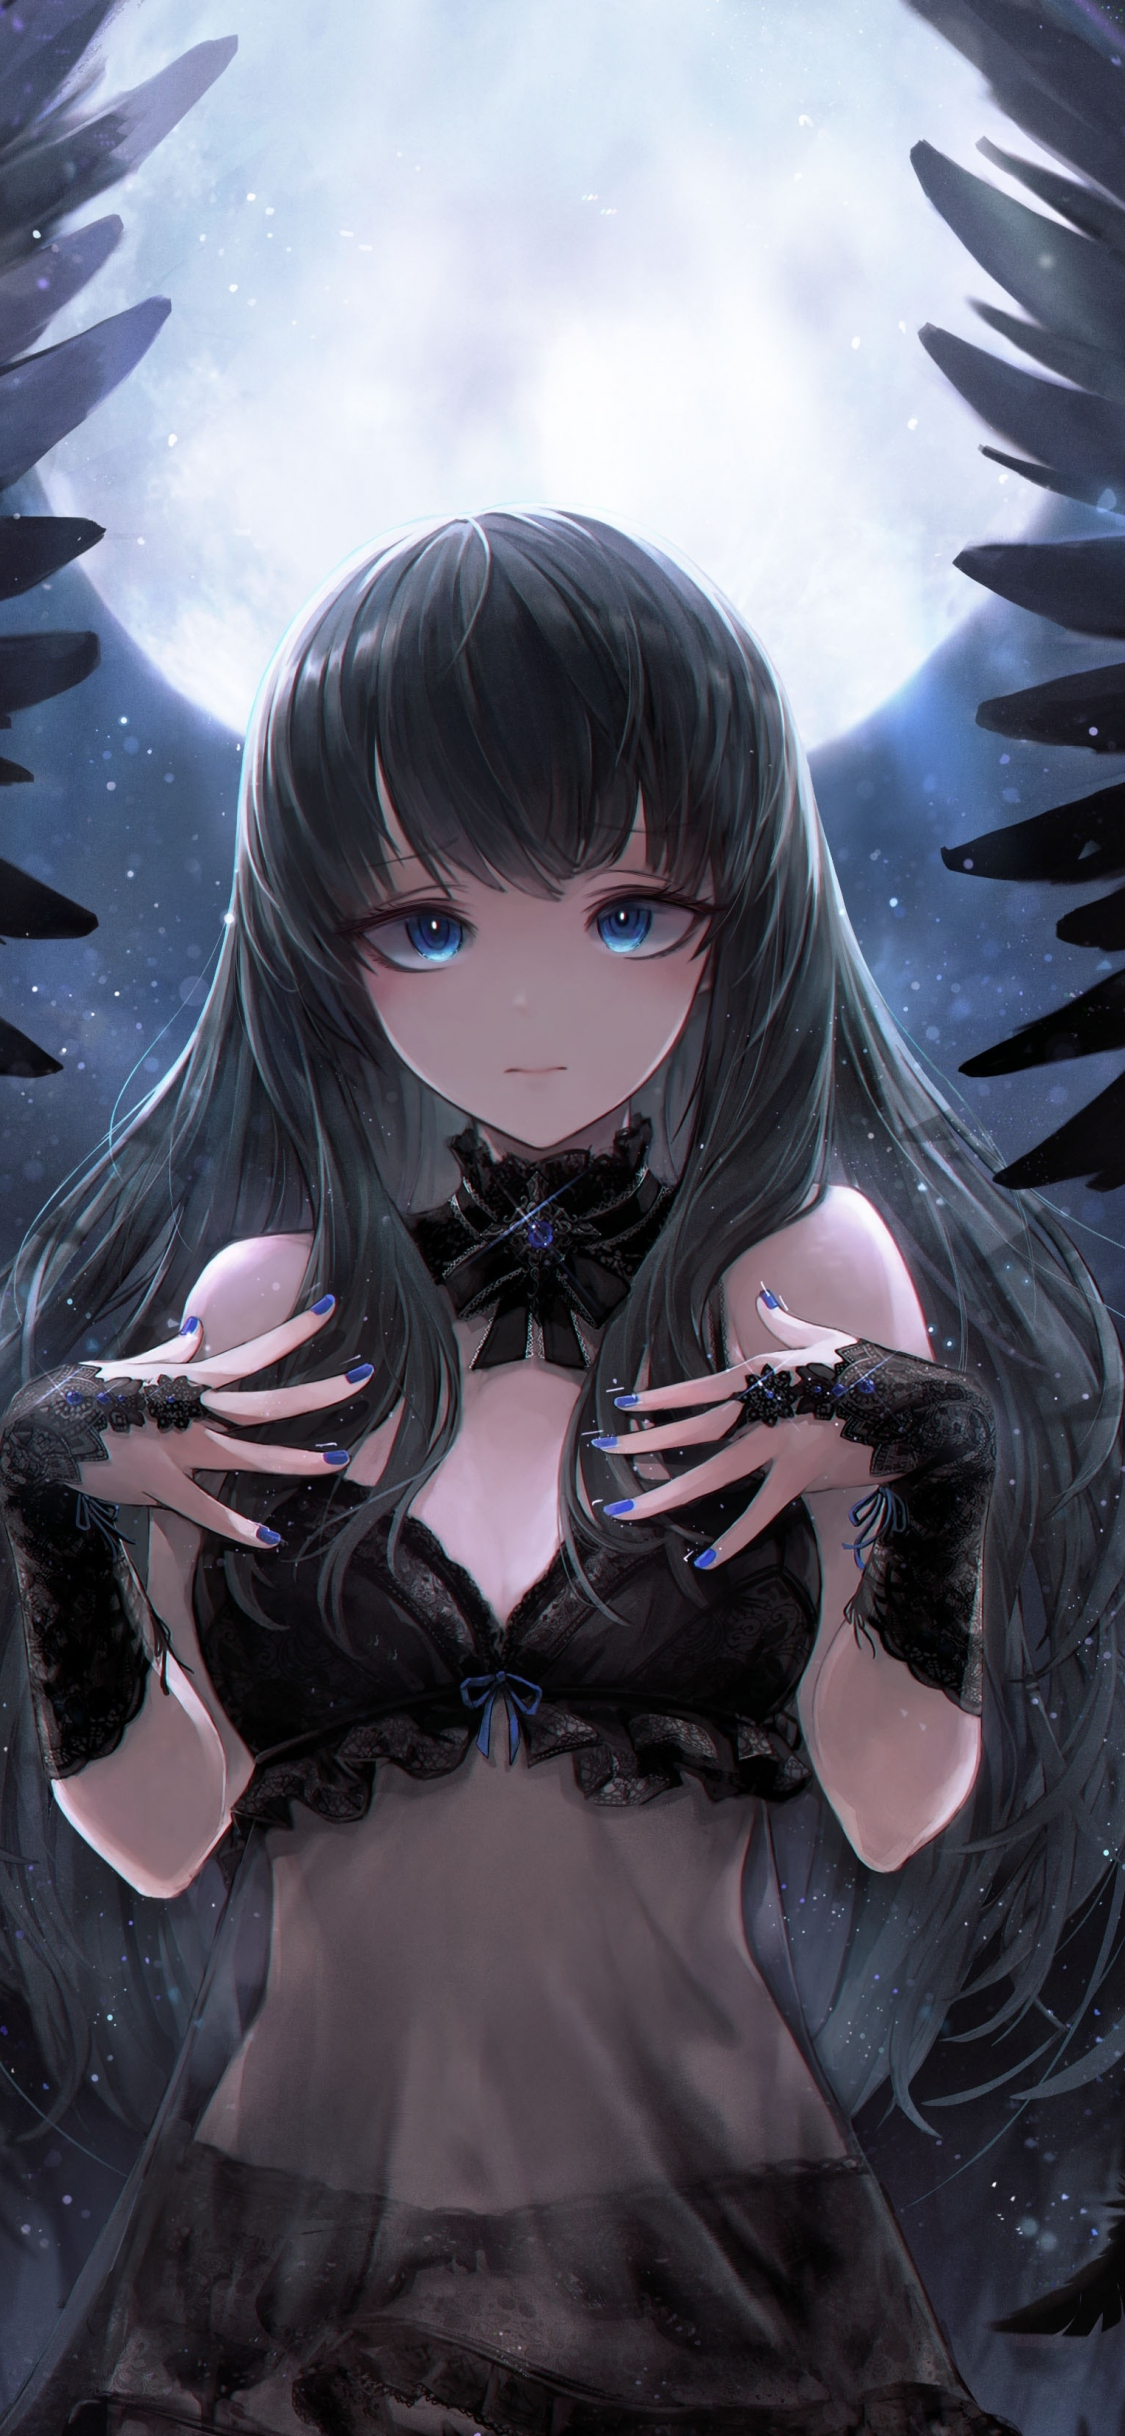 Download 1125x2436 Wallpaper Black Angel Cute Anime Girl Art Iphone X 1125x2436 Hd Image Background 15859